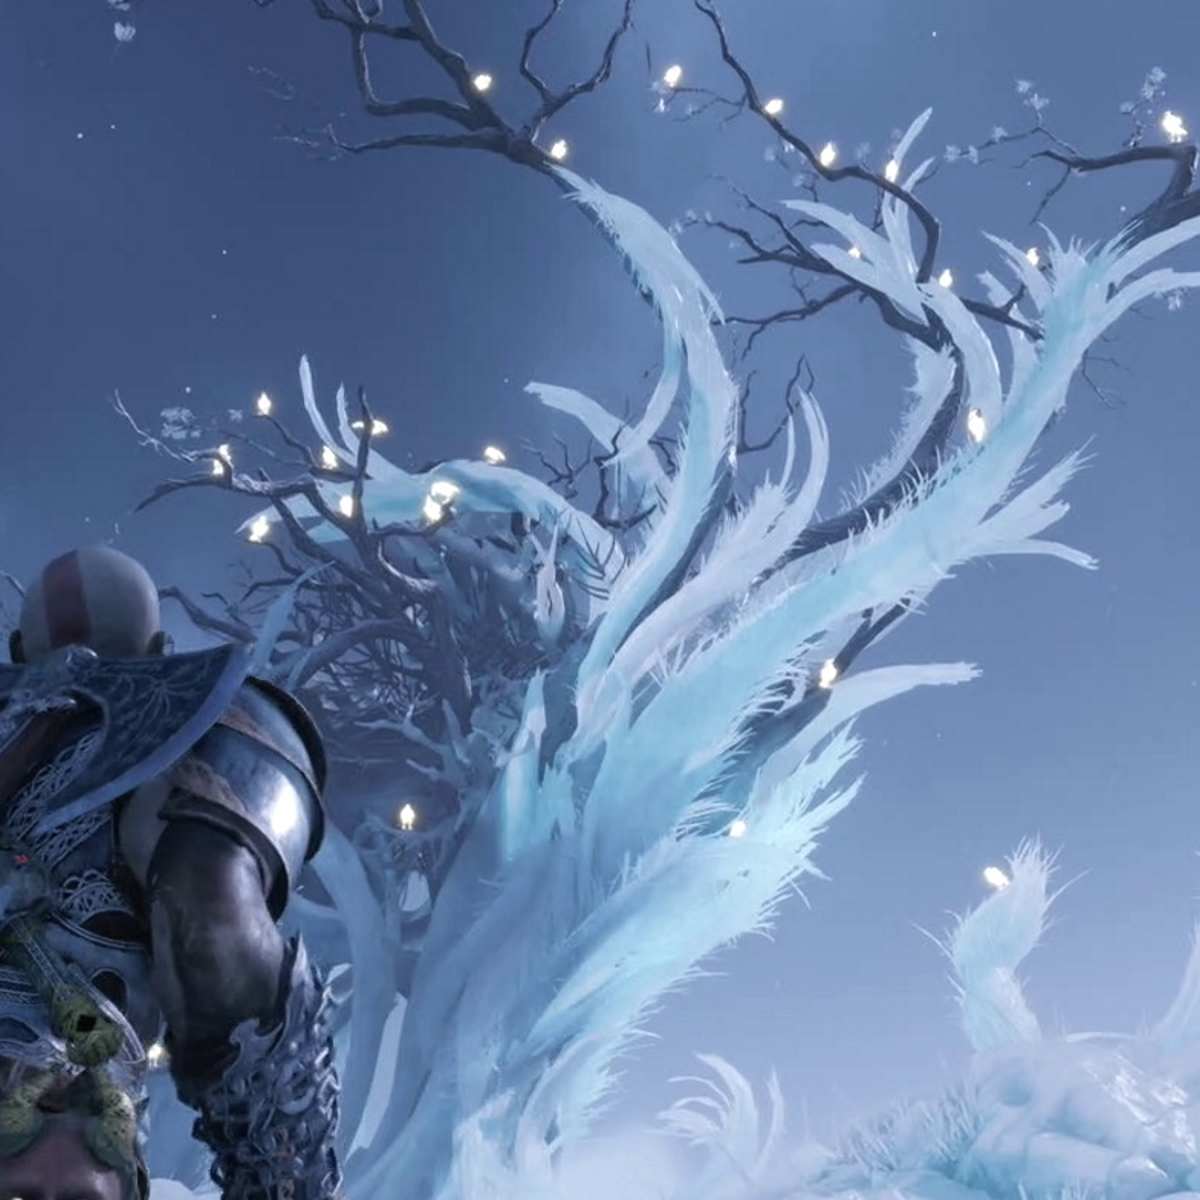 God of War Ragnarök Odin's Ravens locations and rewards for 'Eyes